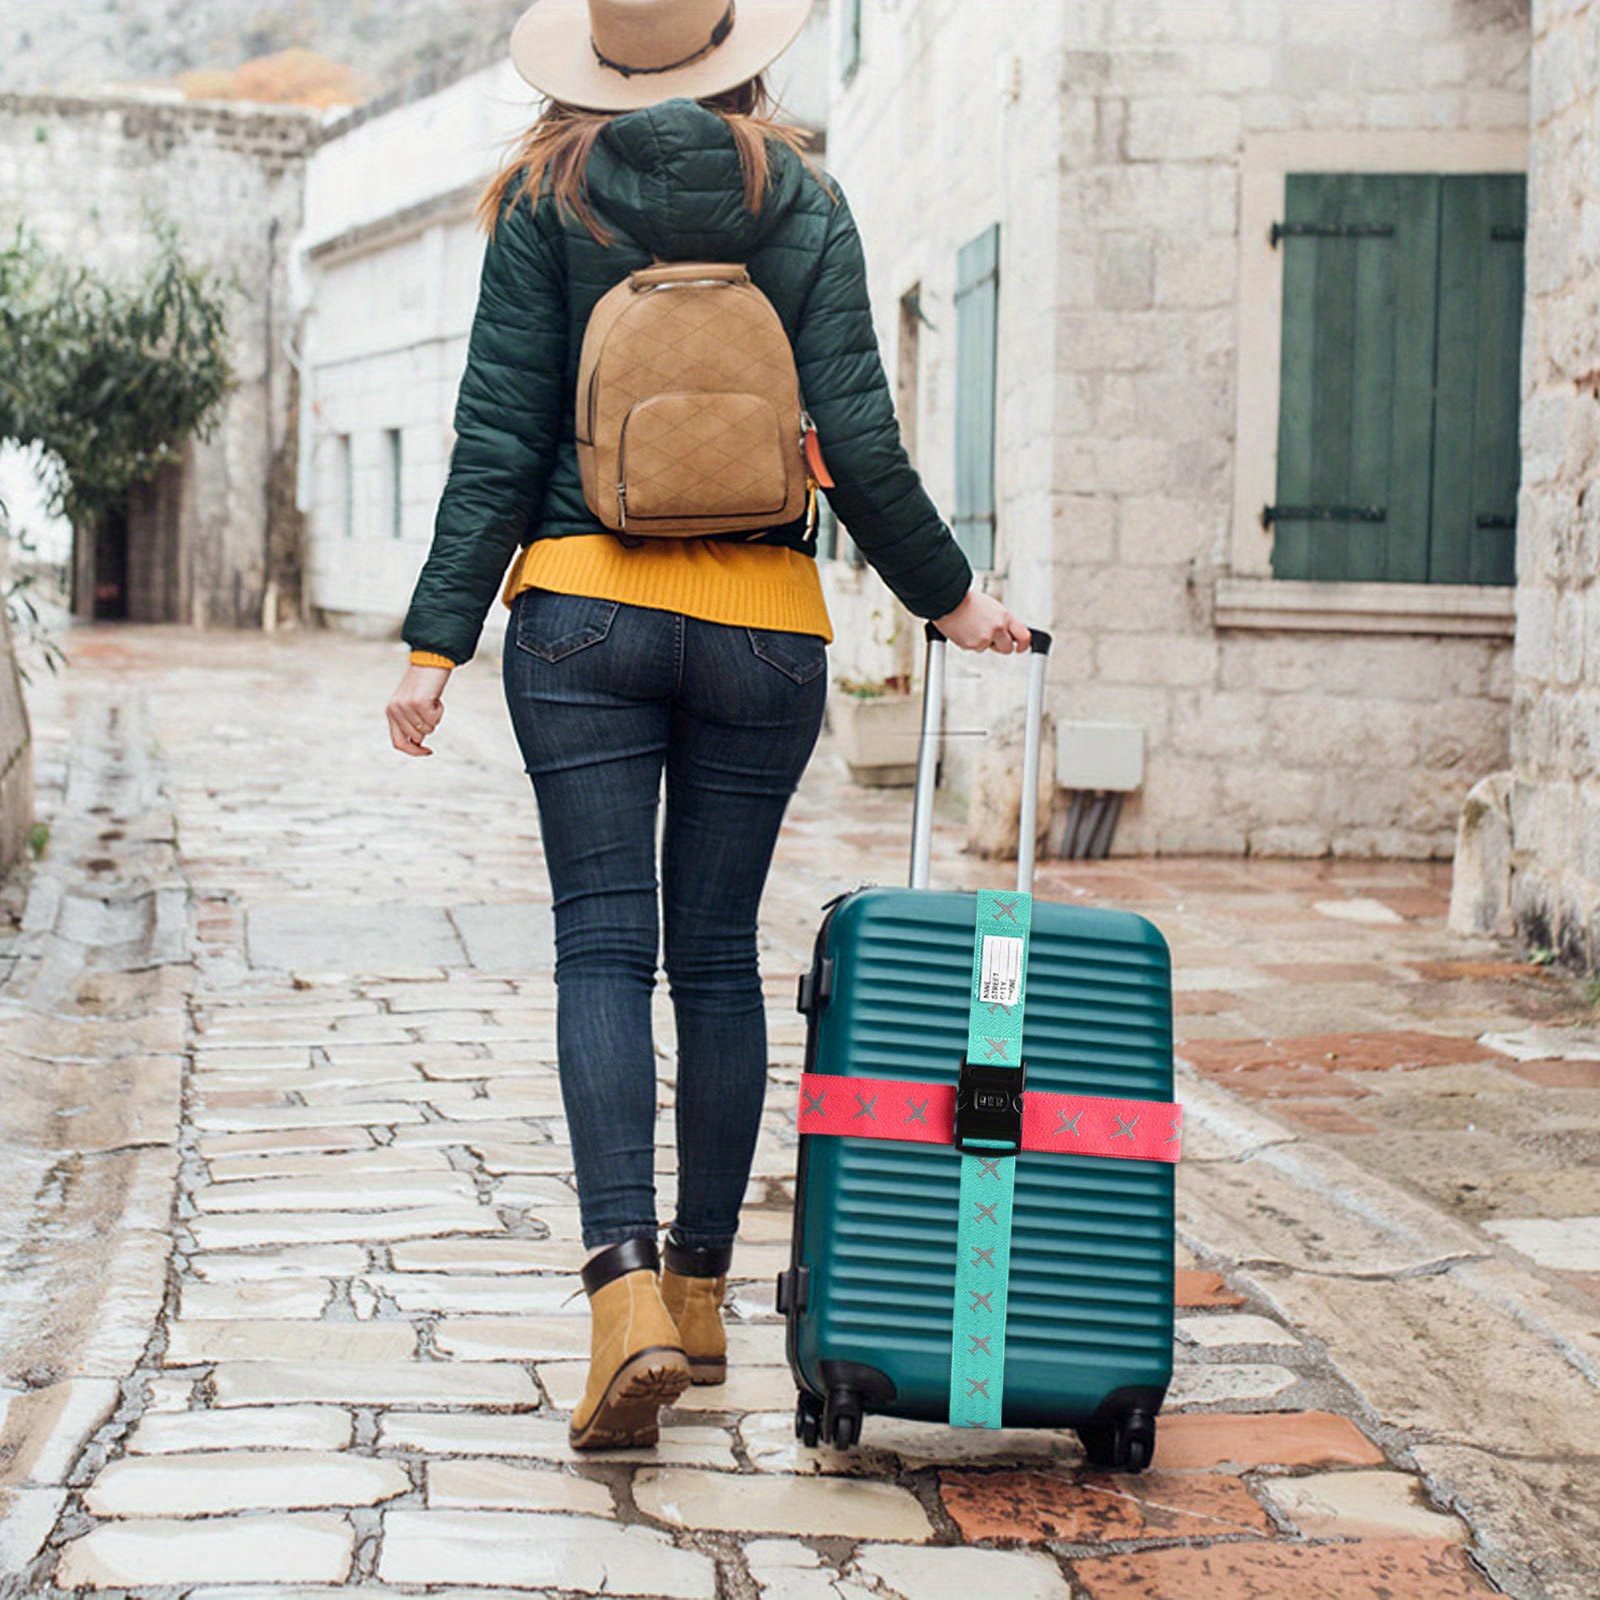 2Pcs Adjustable Luggage Straps Travel TSA Approved - Adjustable Suitcase  Belt Man Women Travel Accessories